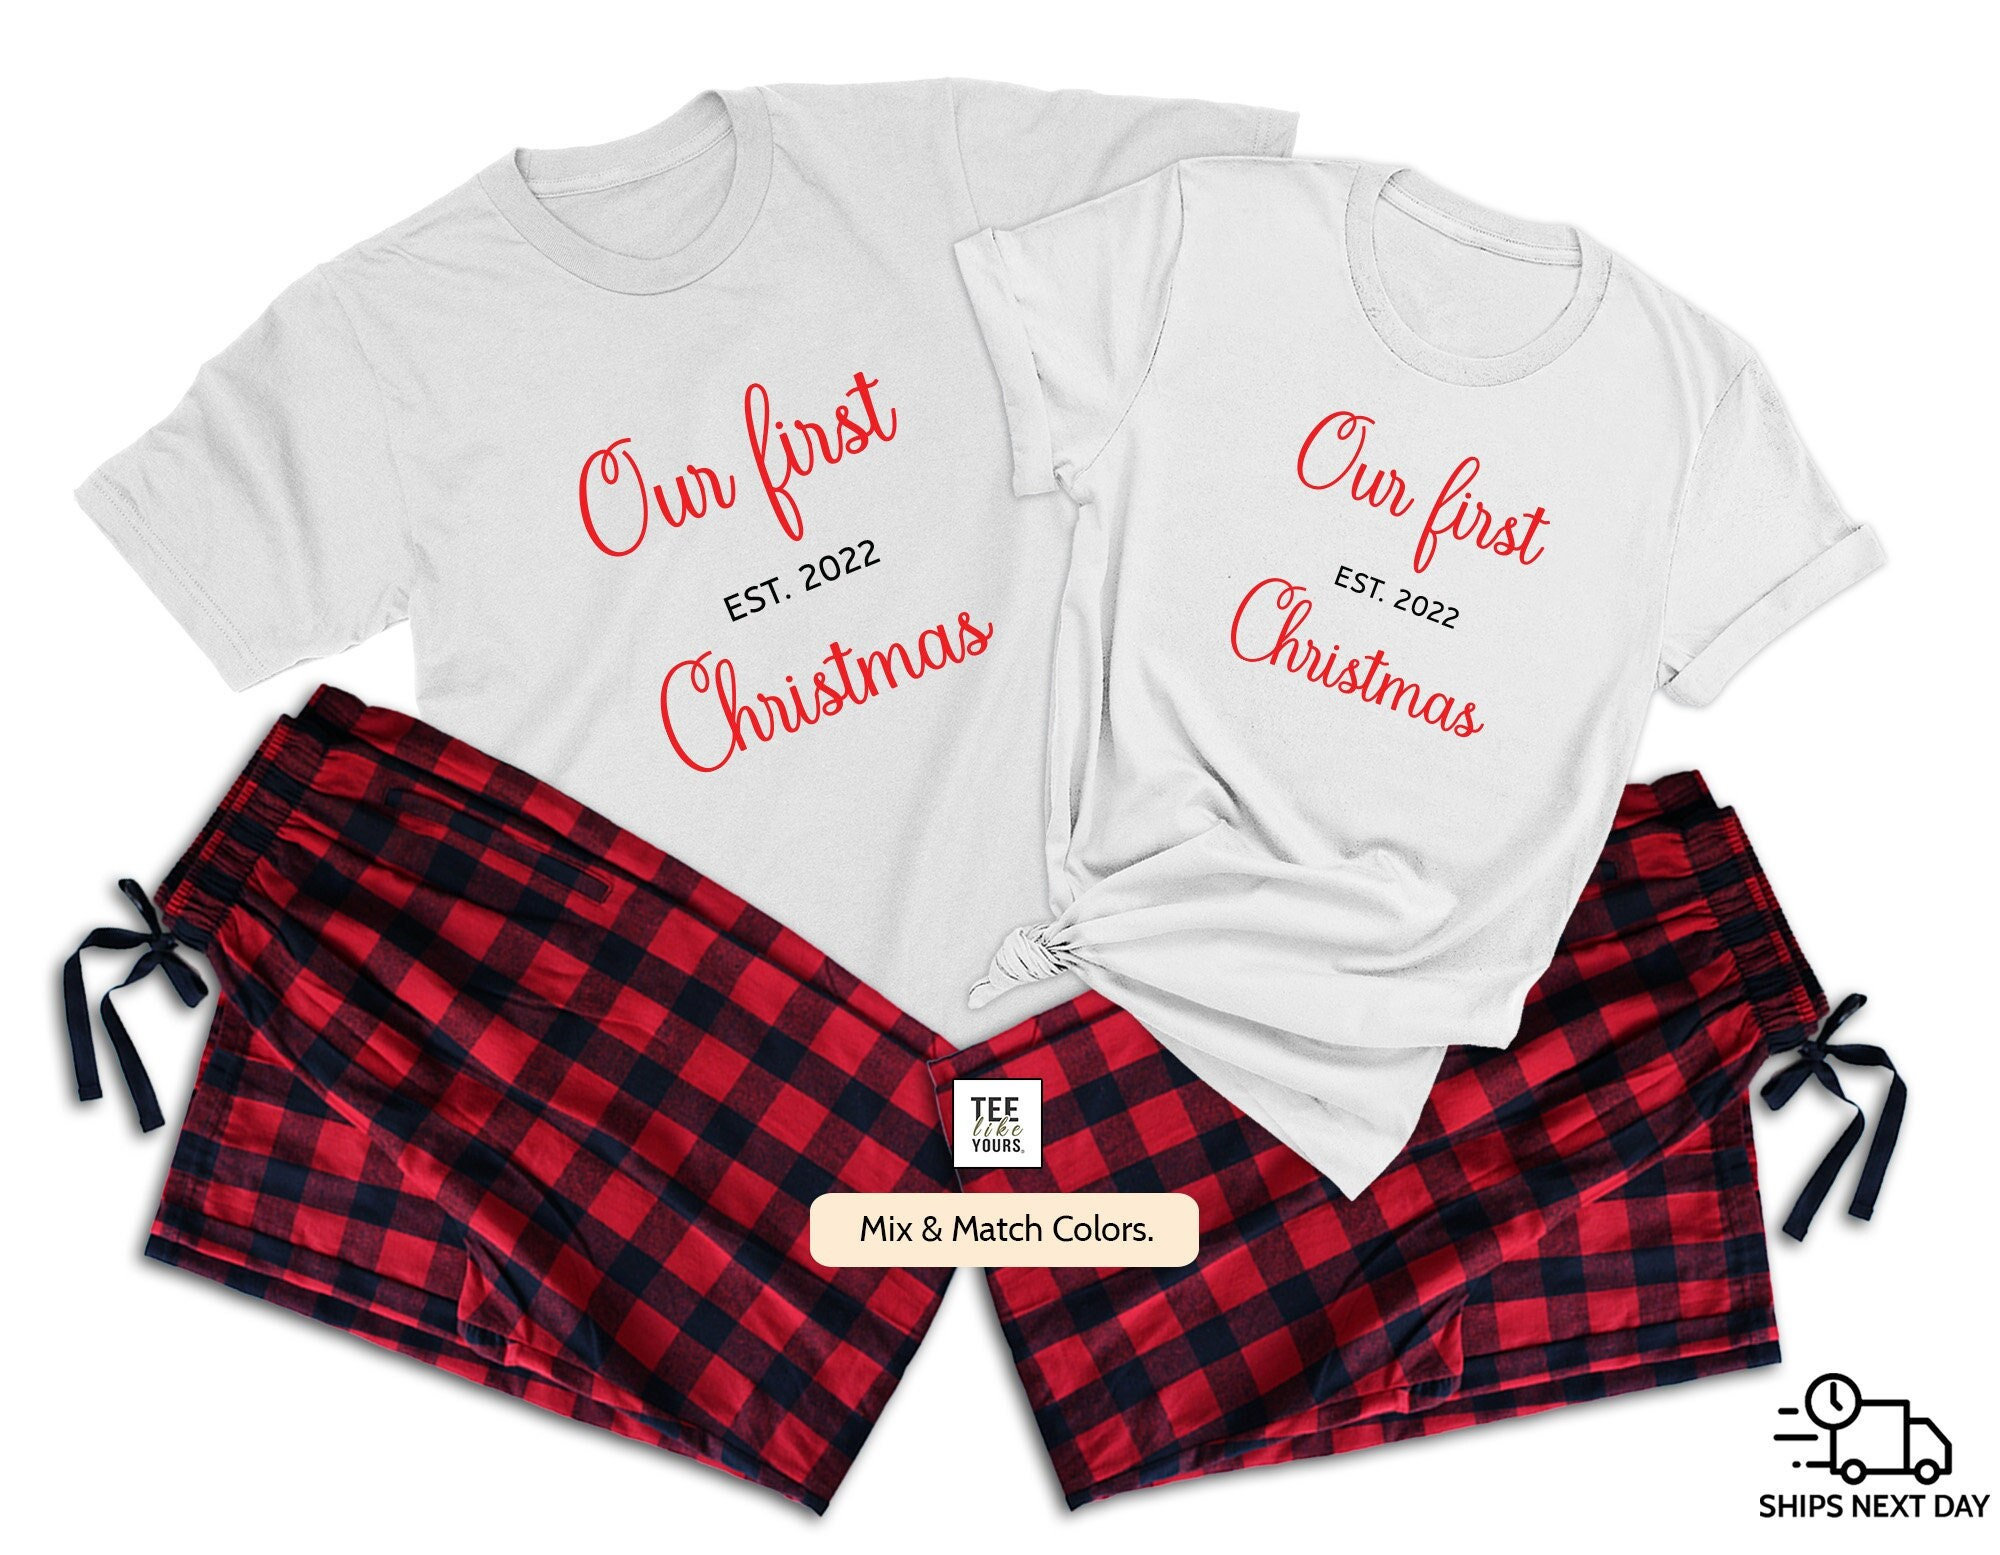 Adorable Family Christmas Pajamas You can Mix or Match - Merrick's Art